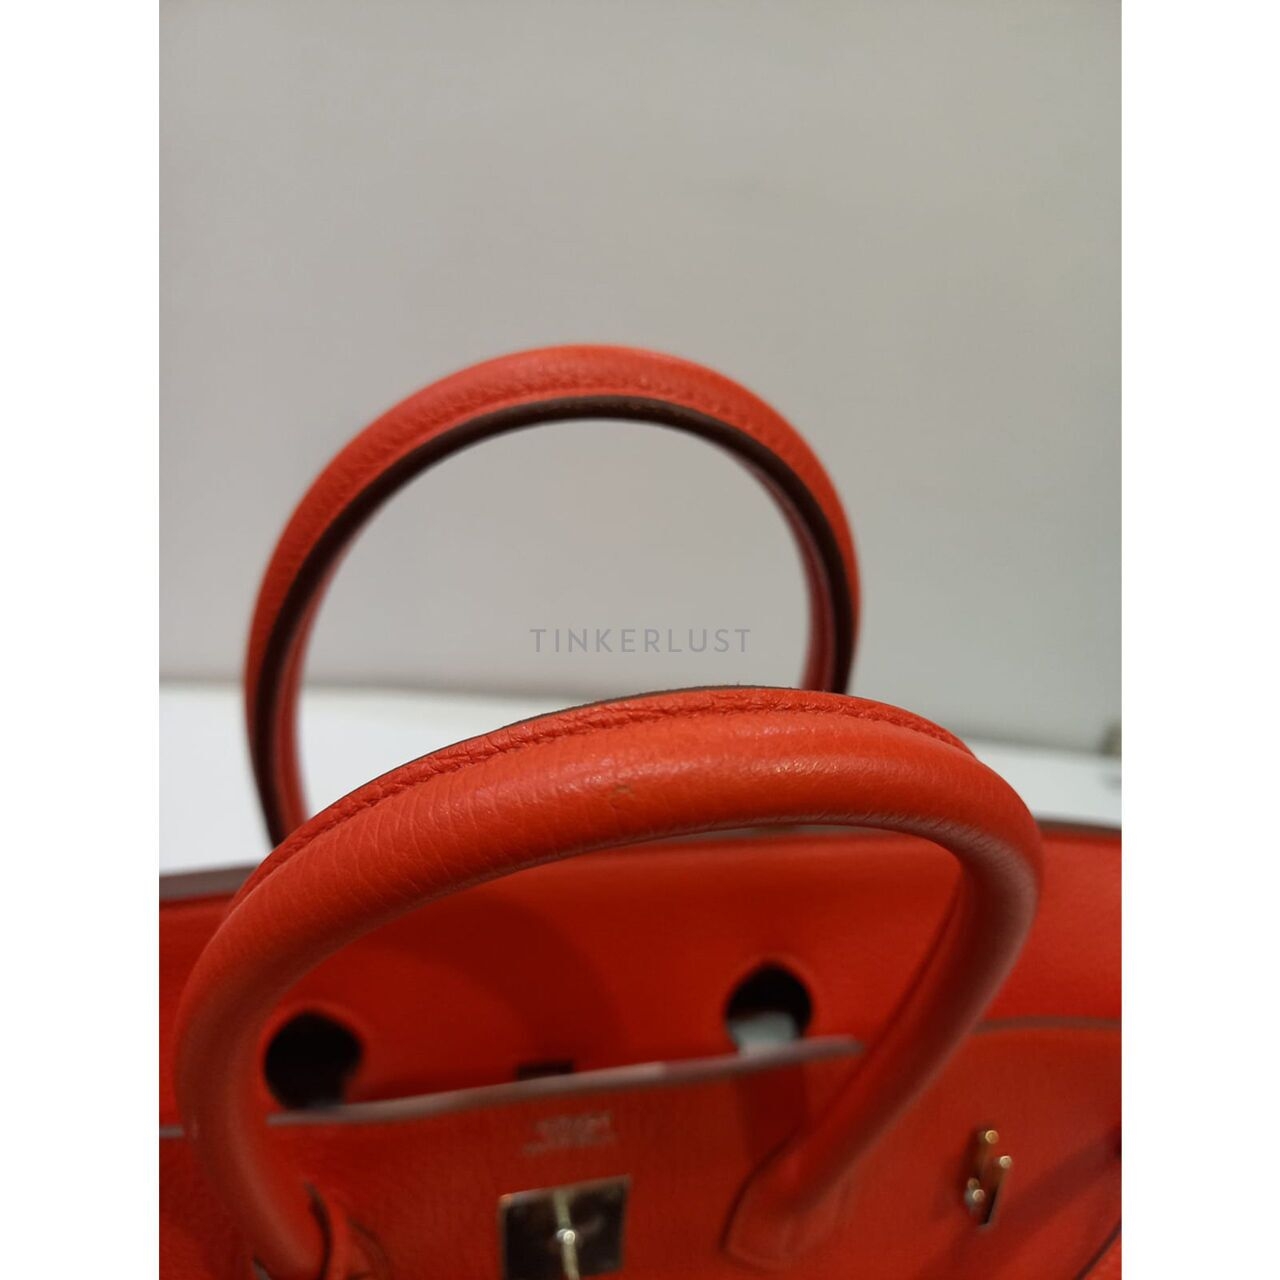 Hermes Birkin 35 Togo Orange Organic #P Square 2012 Handbag